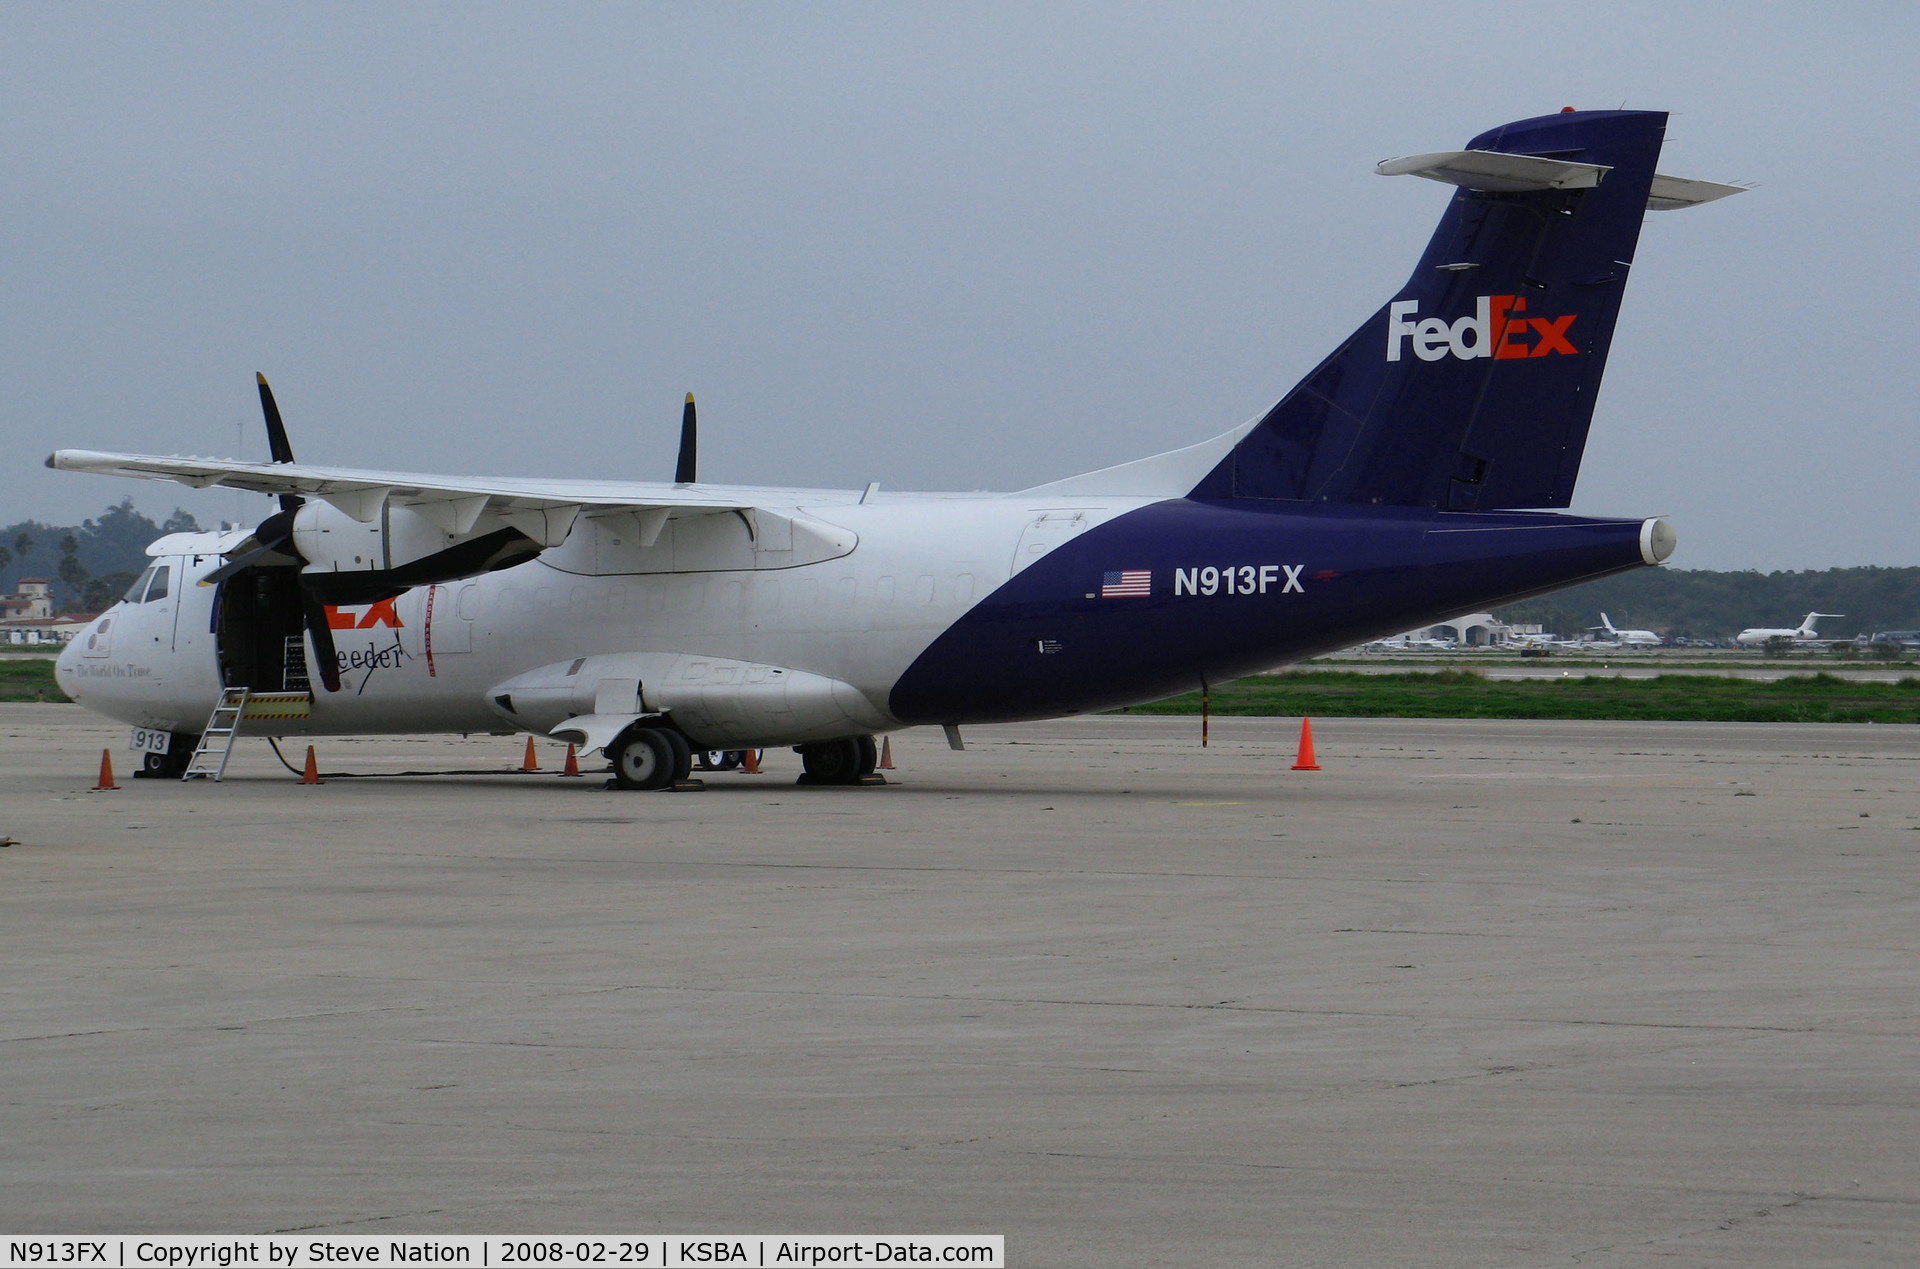 N913FX, 1991 ATR 42-300 C/N 250, FedEx Feeder 1991 ATR 42-300 freighter @ Santa Barbara Municipal Airport, CA 